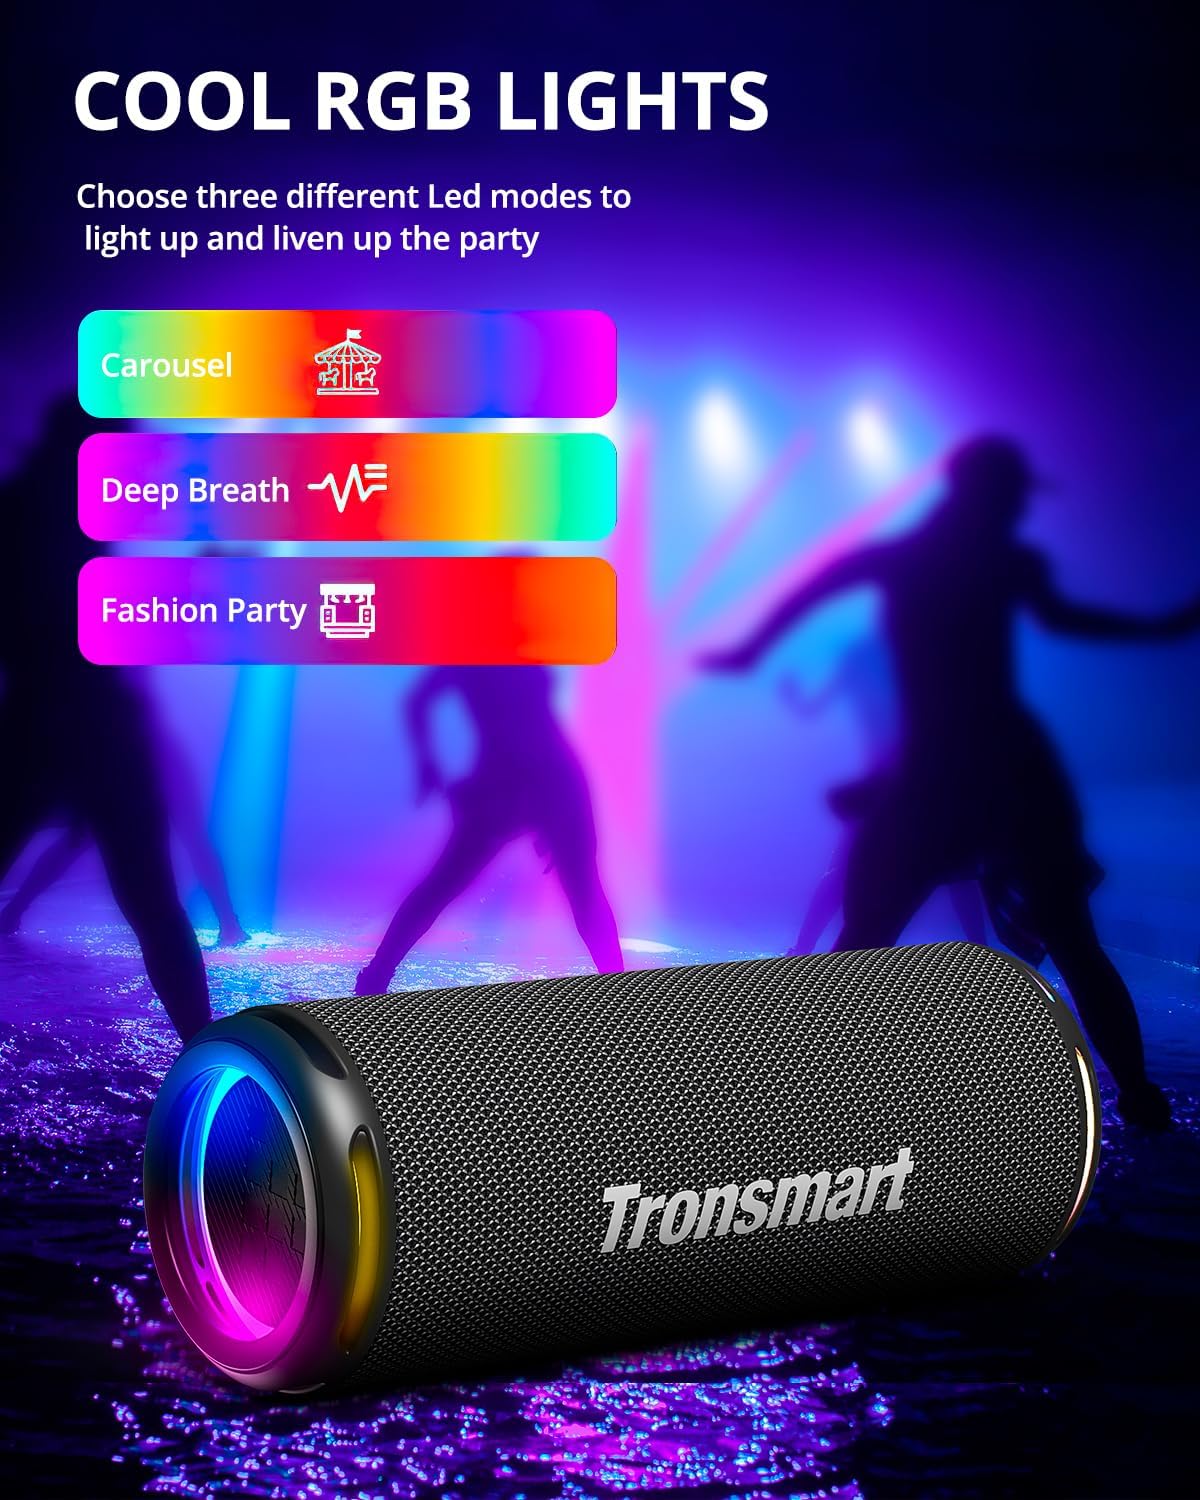 Tronsmart T7 review: A waterproof speaker with a fun light show